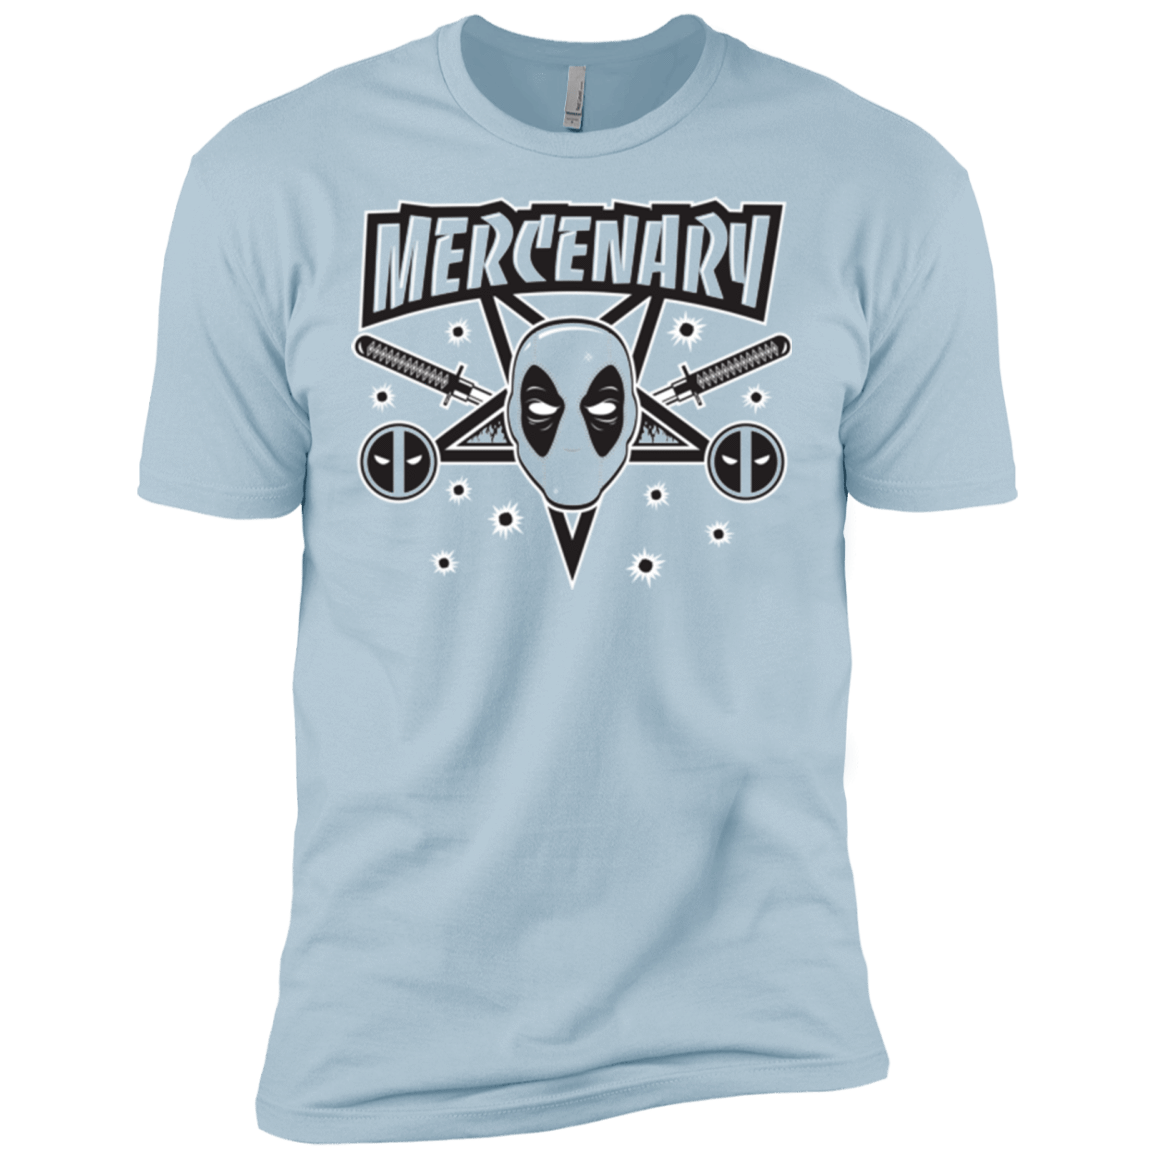 T-Shirts Light Blue / X-Small Mercenary (1) Men's Premium T-Shirt